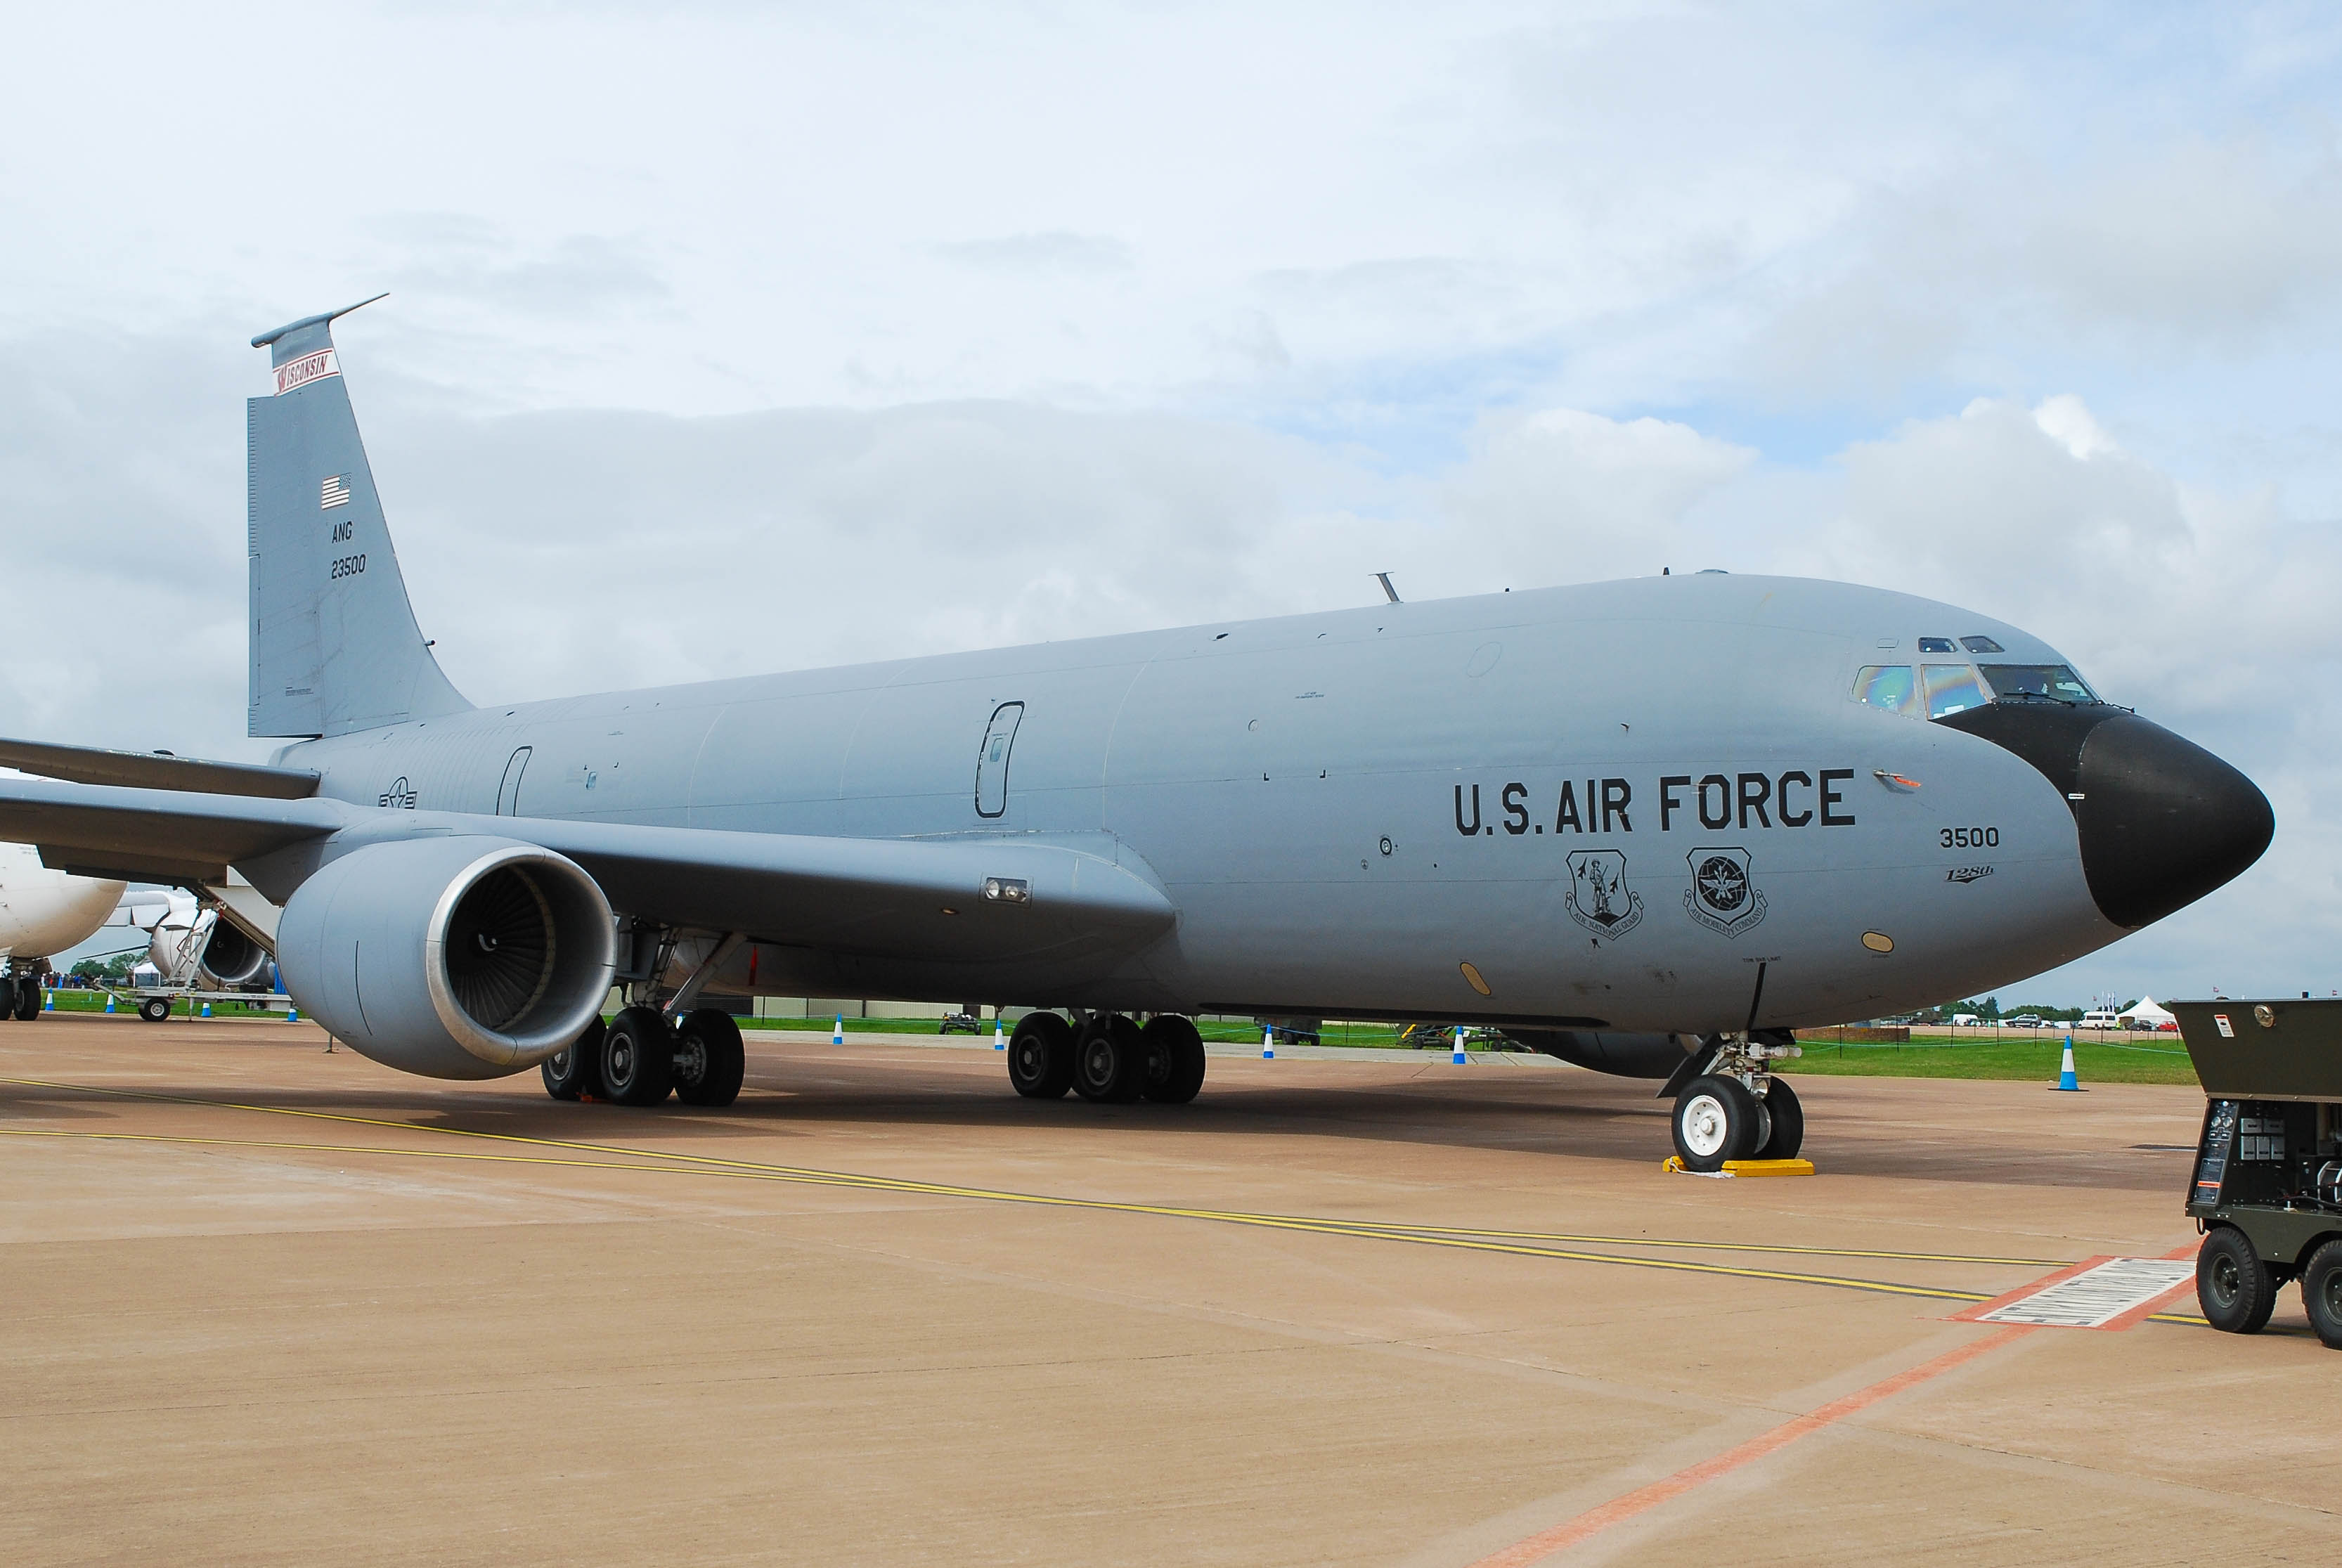 62-3500/623500 USAF - United States Air Force Boeing C-135 Stratotanker Airframe Information - AVSpotters.com